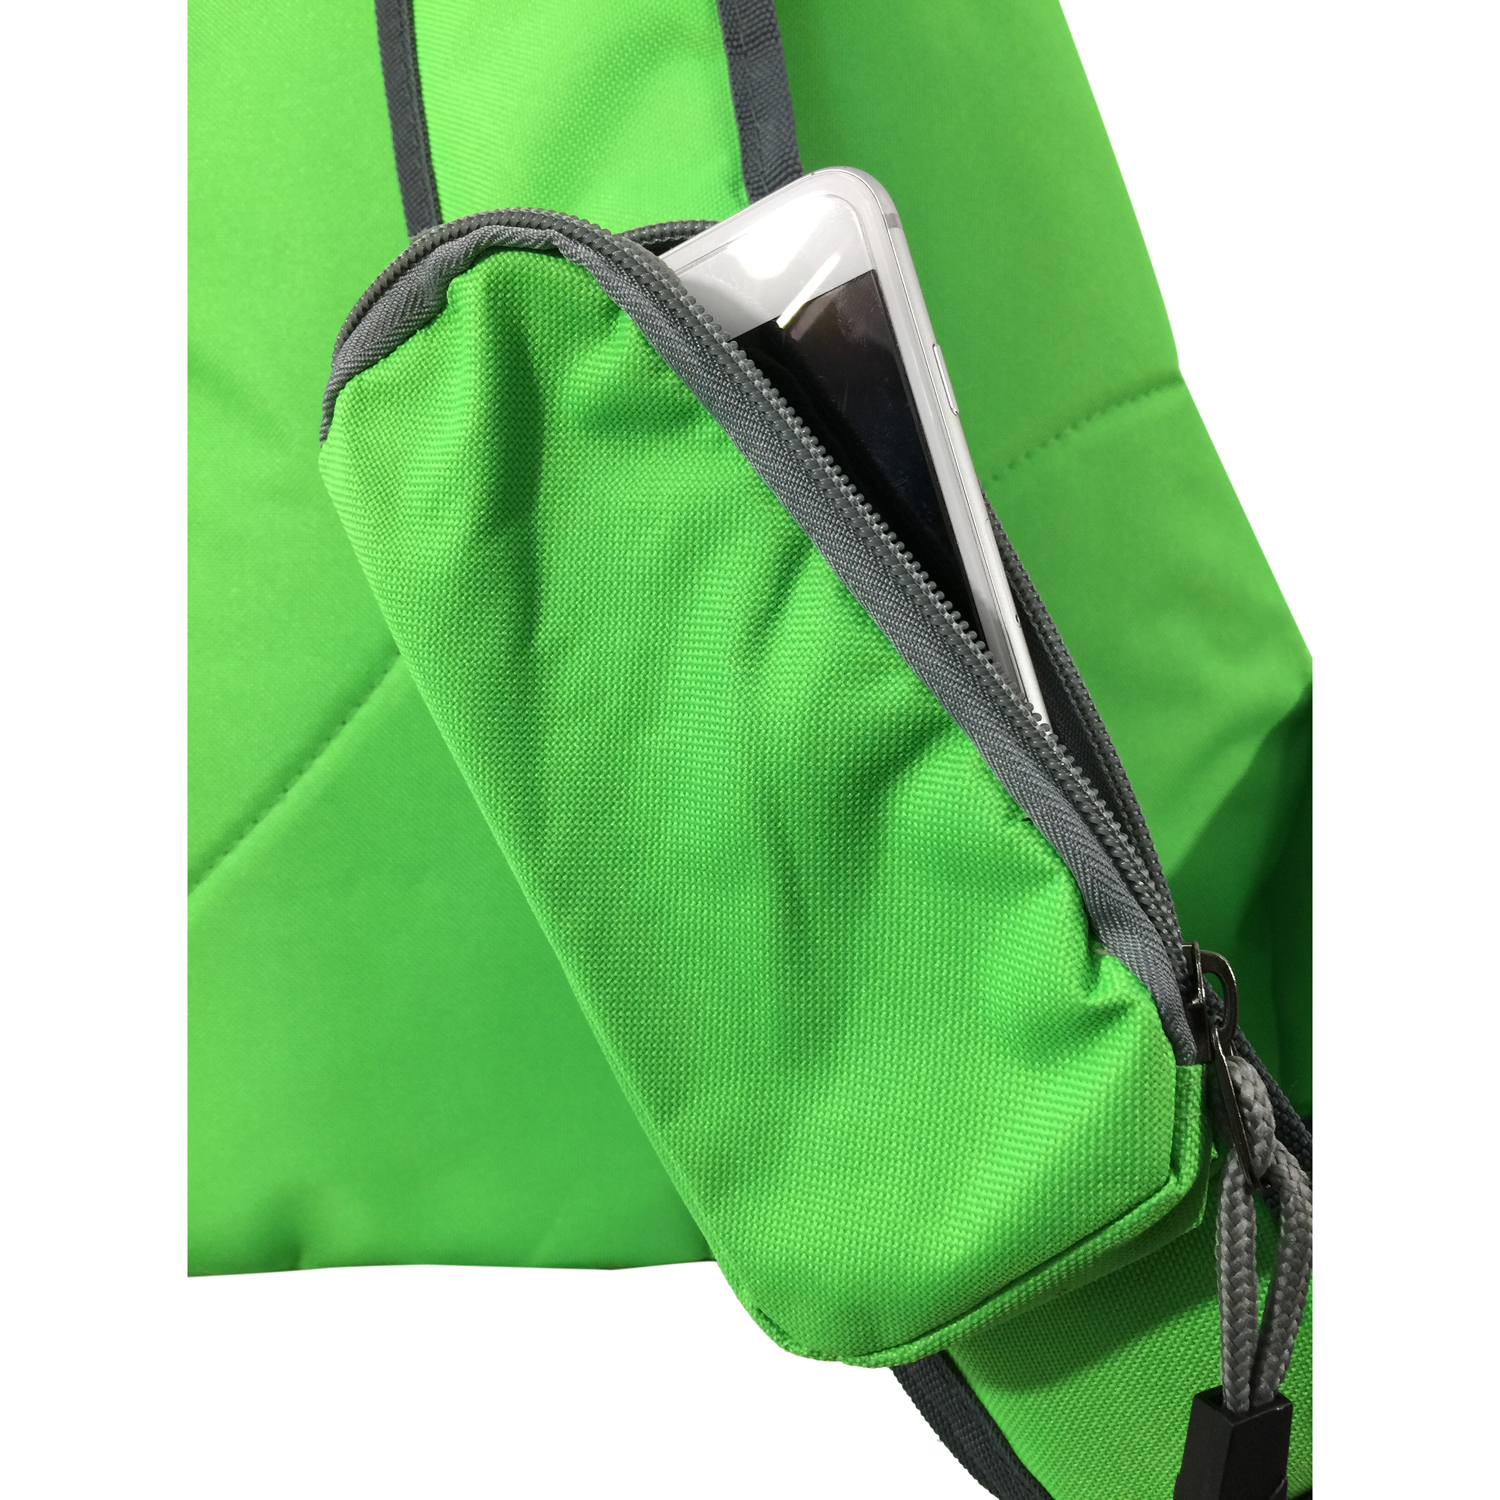 K-Cliffs Reflective Sling Backpack Bright Color Safety Cross Body Bag Student Daypack Bookbag Green - image 4 of 7